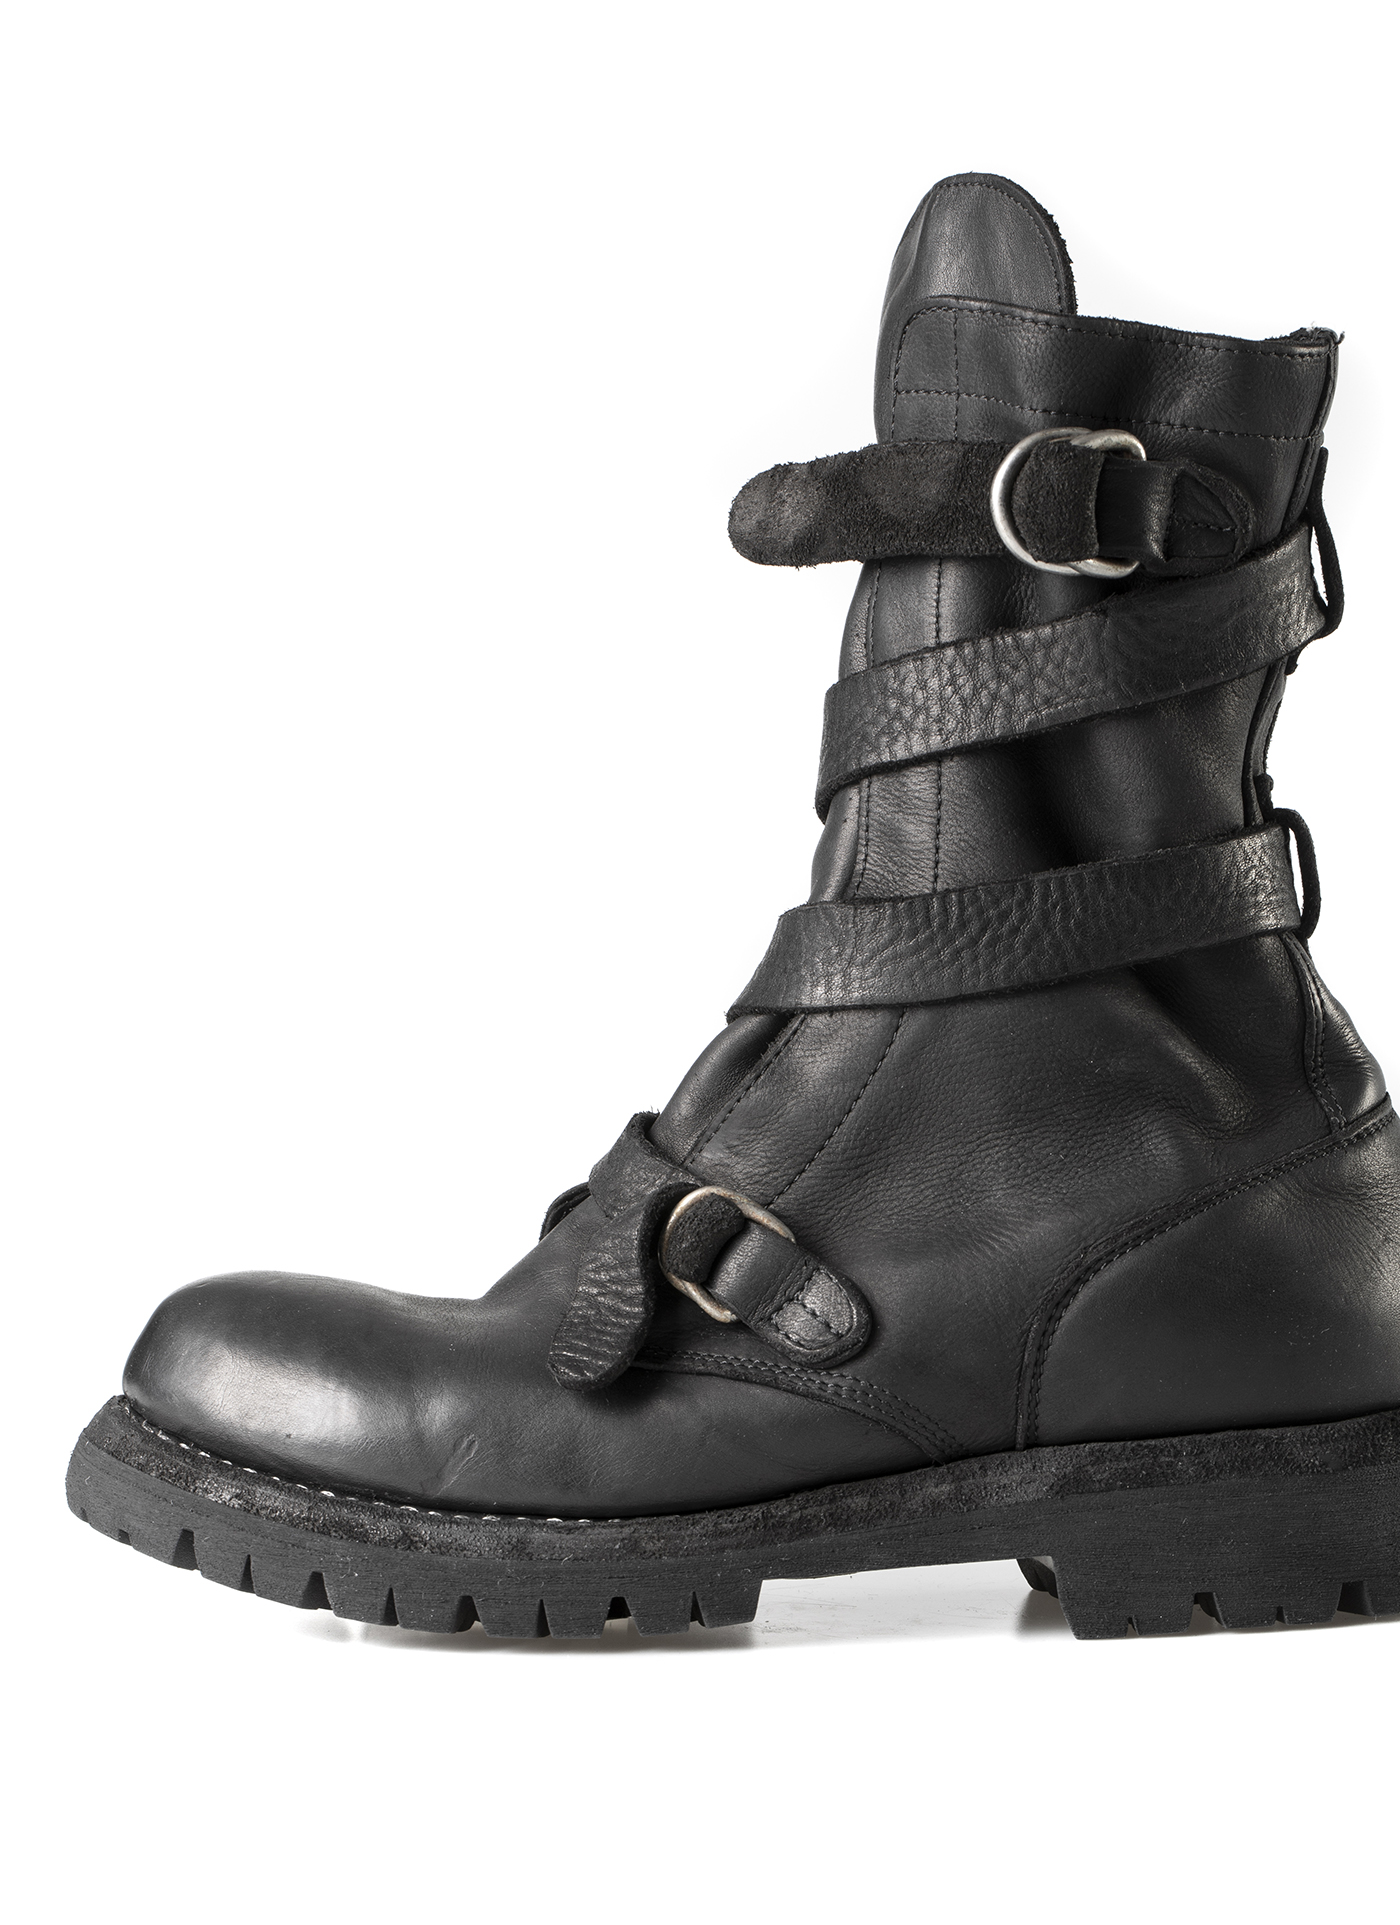 vibram boots military